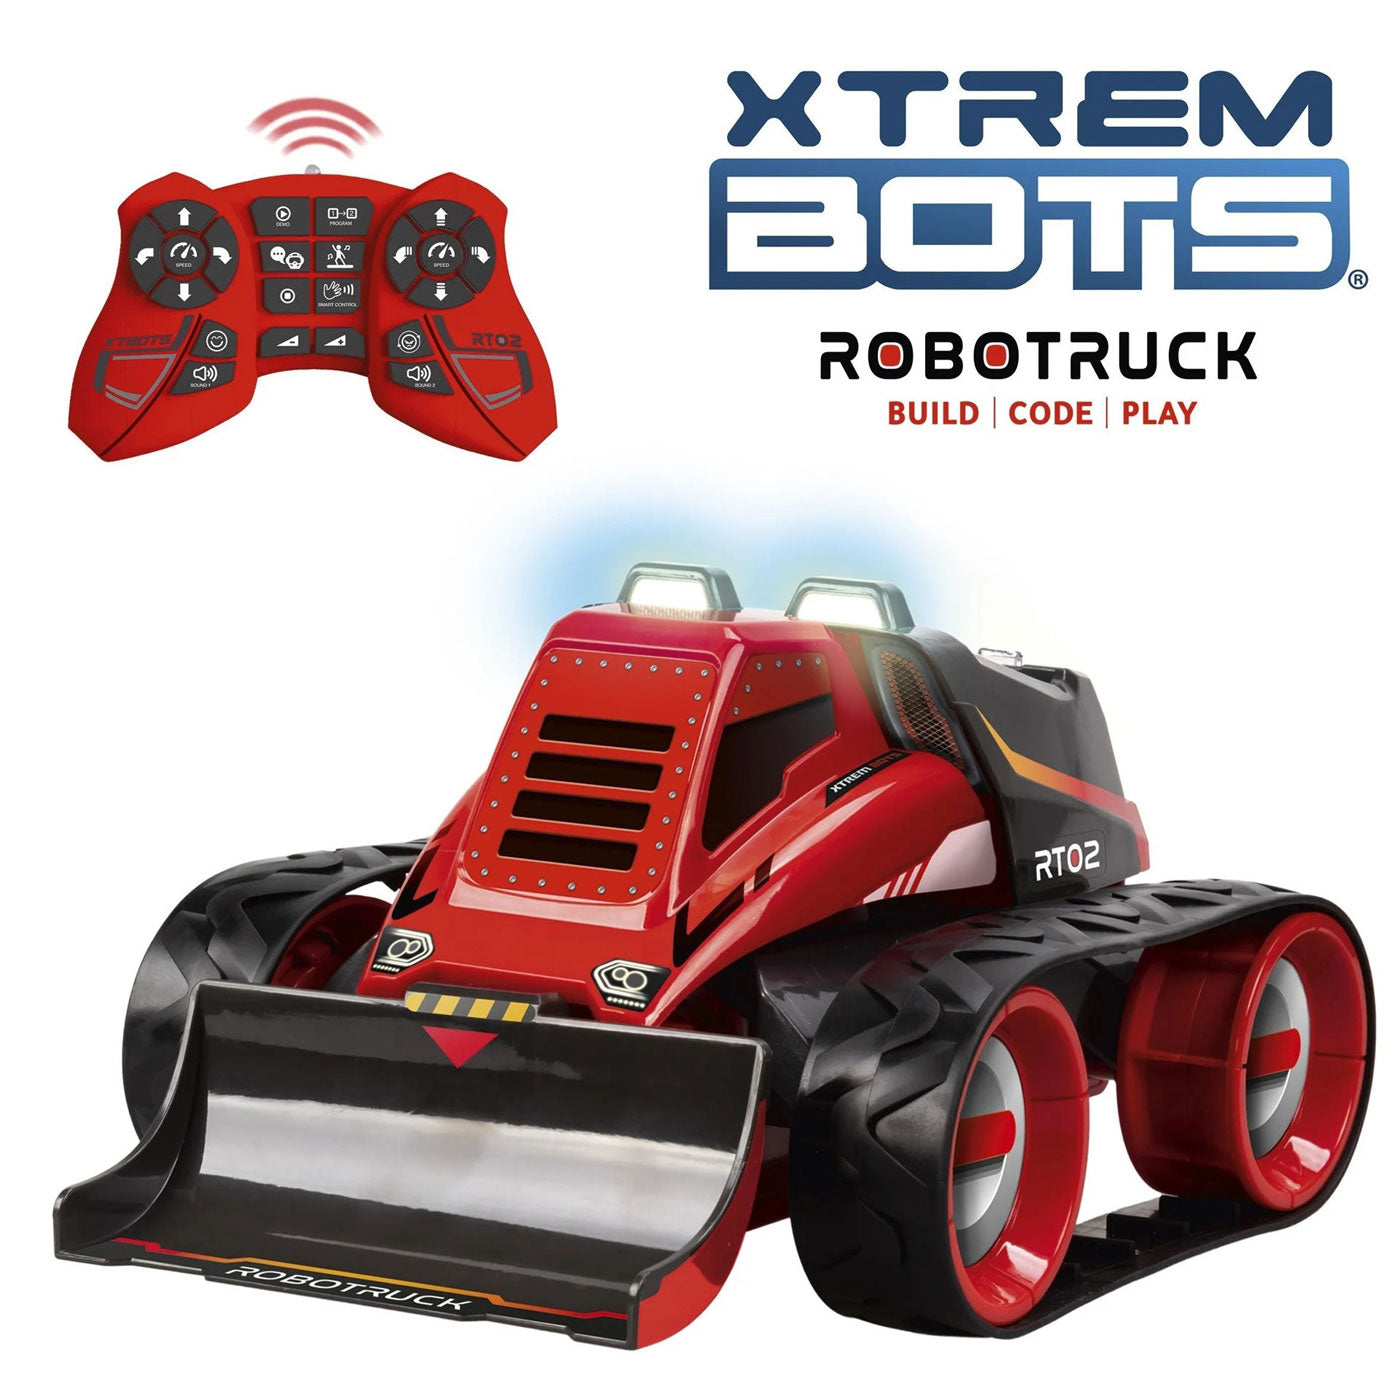 Xtrem Bots Educational Robot Truck Ages 8+